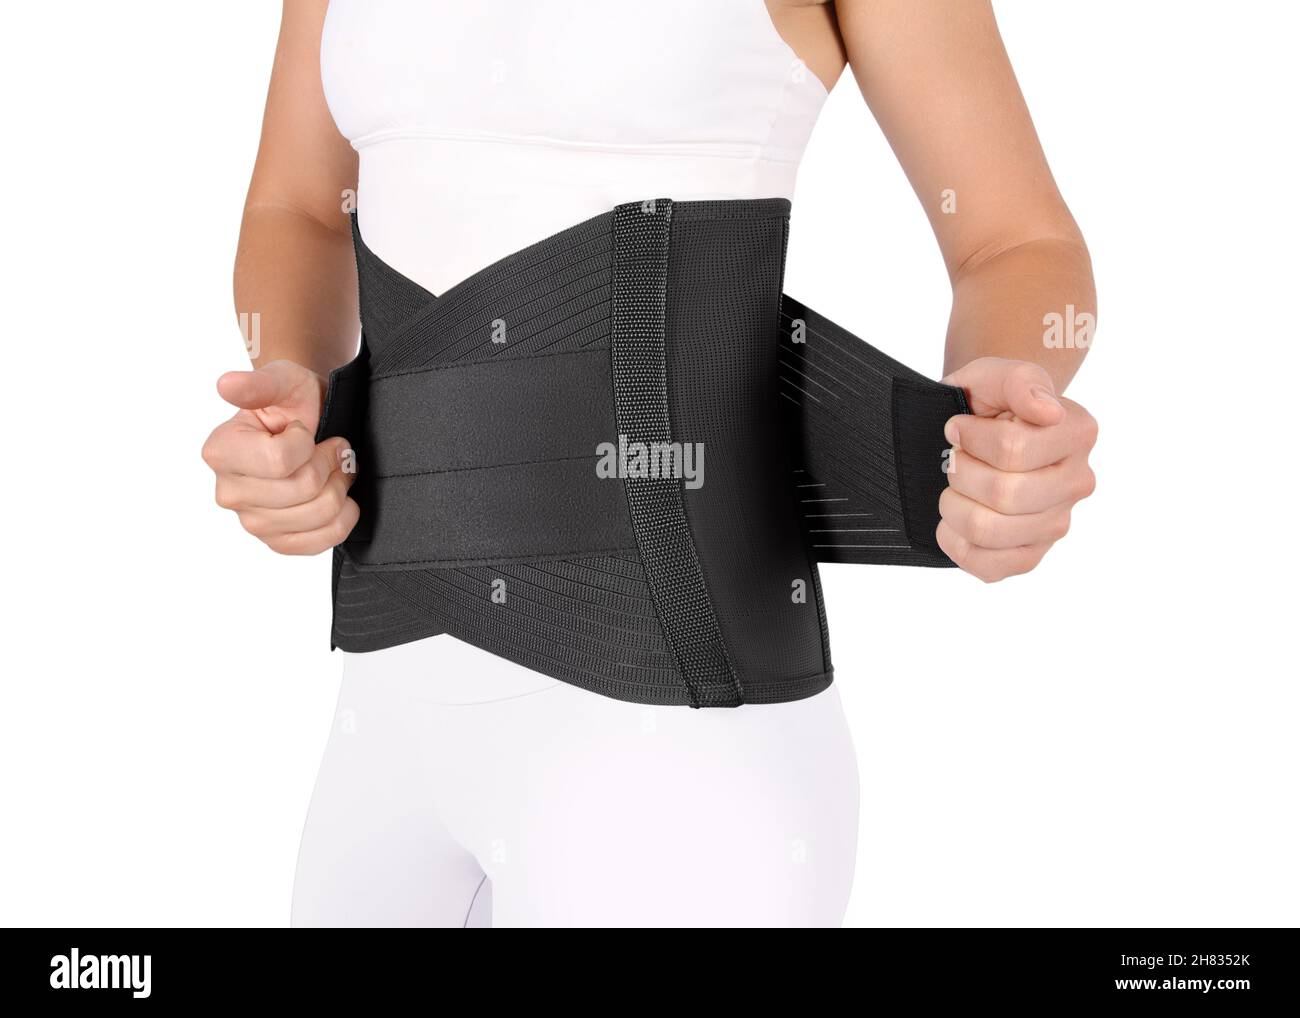 https://c8.alamy.com/comp/2H8352K/orthopedic-lumbar-corset-on-the-human-body-back-brace-waist-support-belt-for-back-posture-corrector-for-back-clavicle-spine-post-operative-hernia-2H8352K.jpg